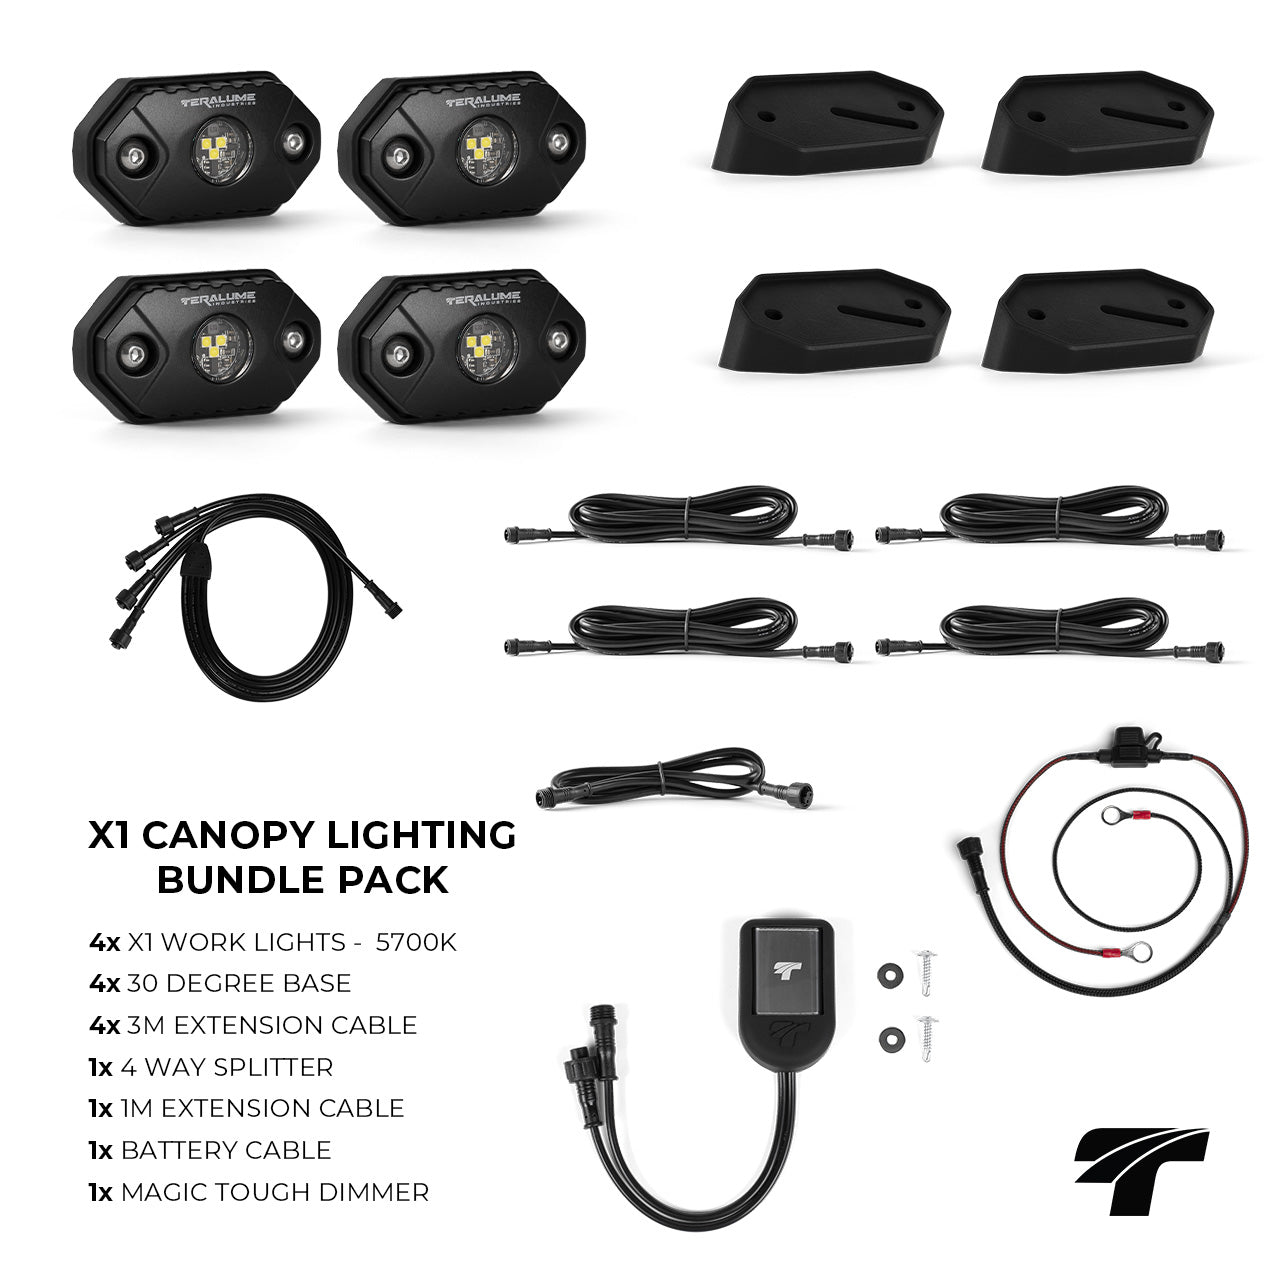 X1 Canopy Lighting Bundle Pack